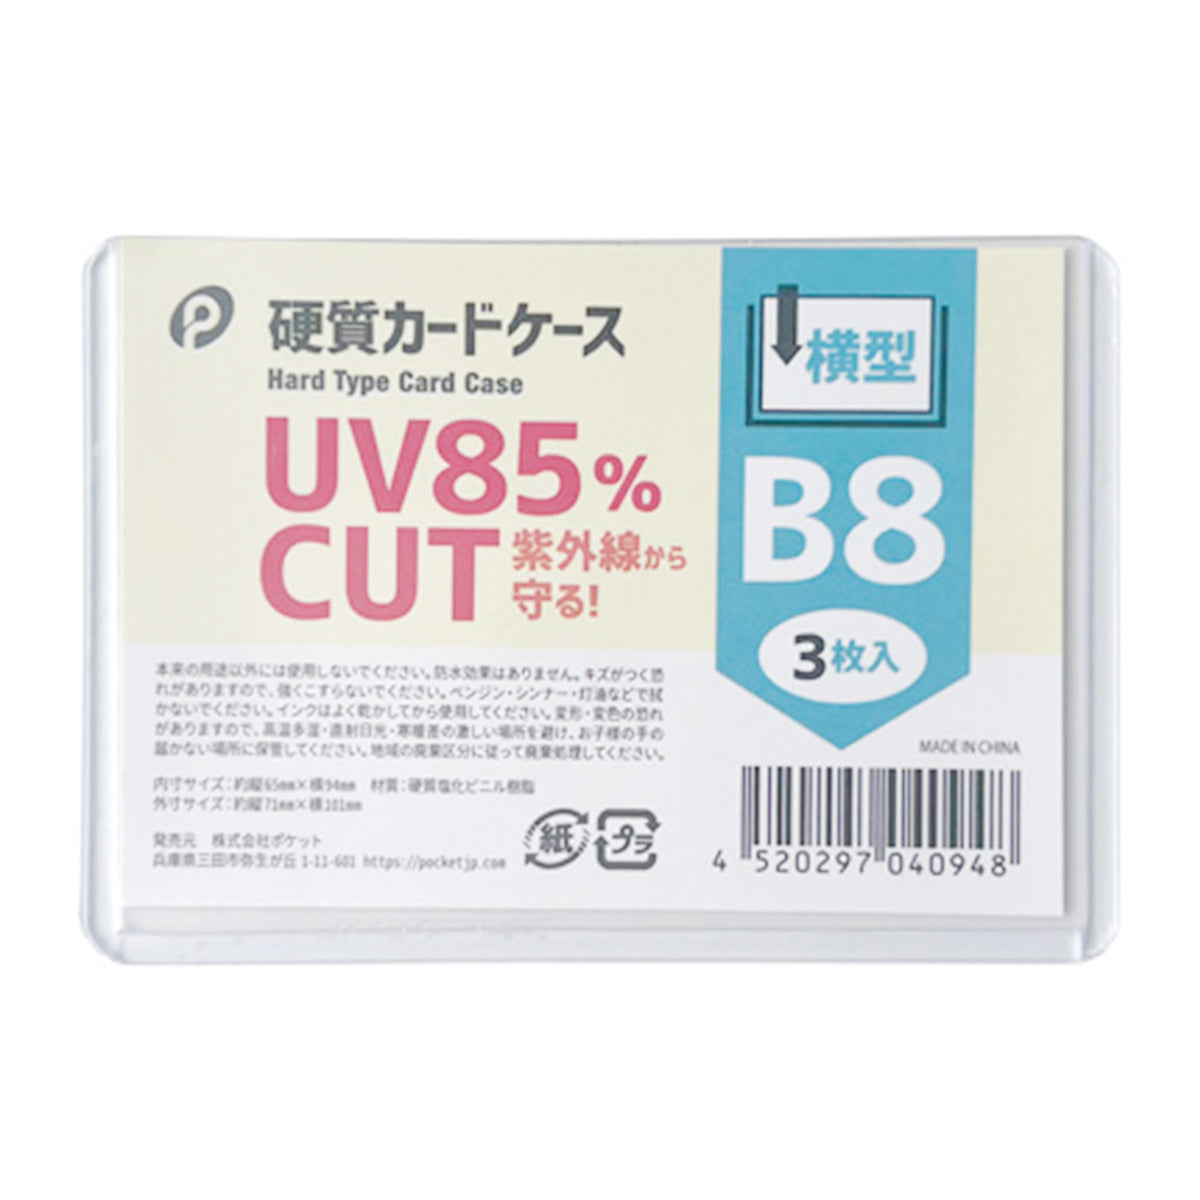 UVカット 硬質 カードケース 横型 B8 3枚入  352128